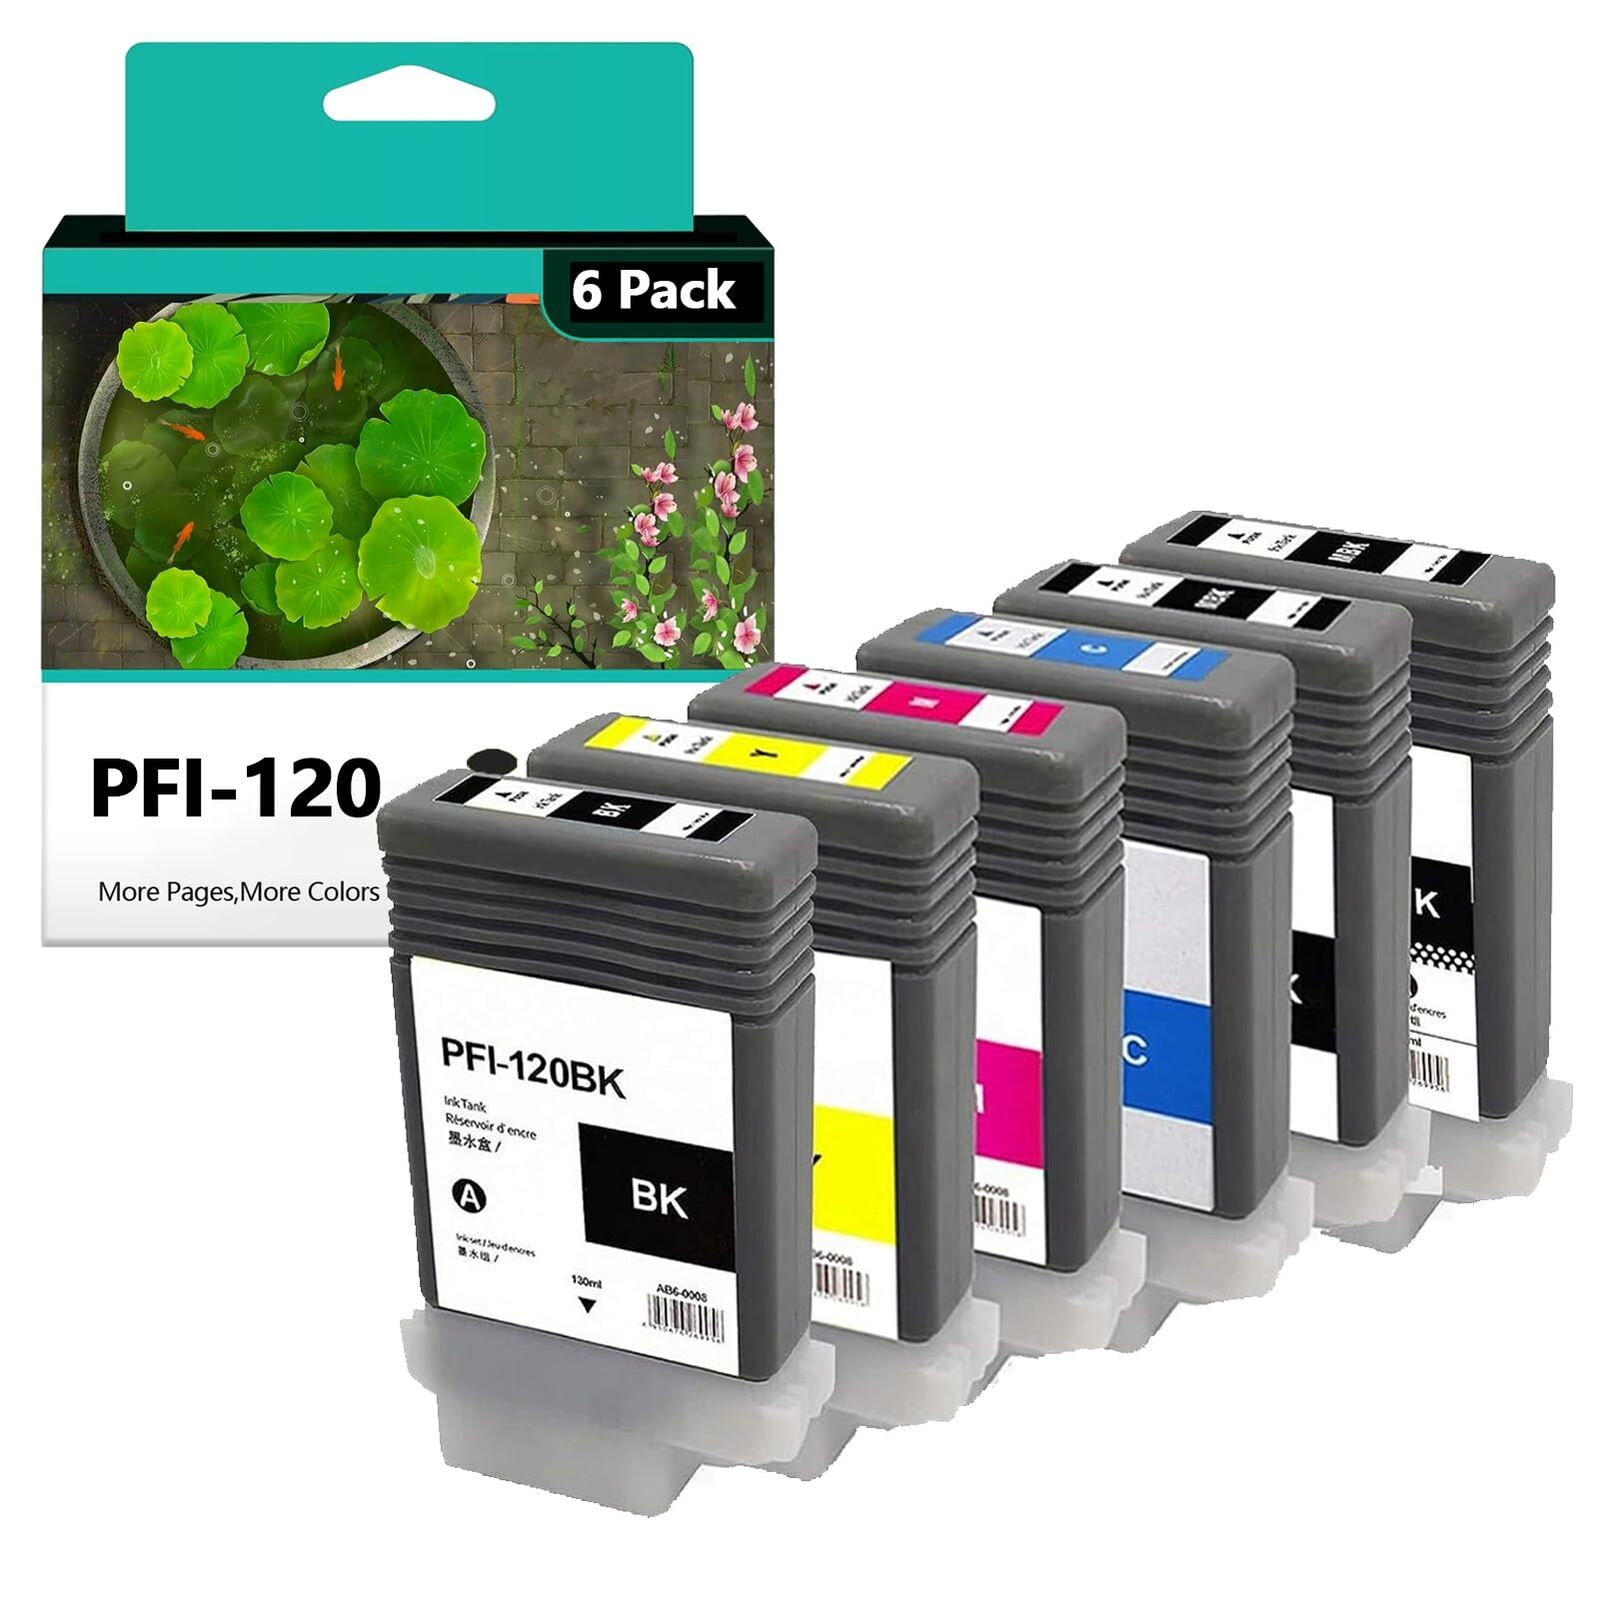 PFI-120 Ink Cartridges Replacements for TM-200 TM-205 TM-300 Printers - 6 Pack